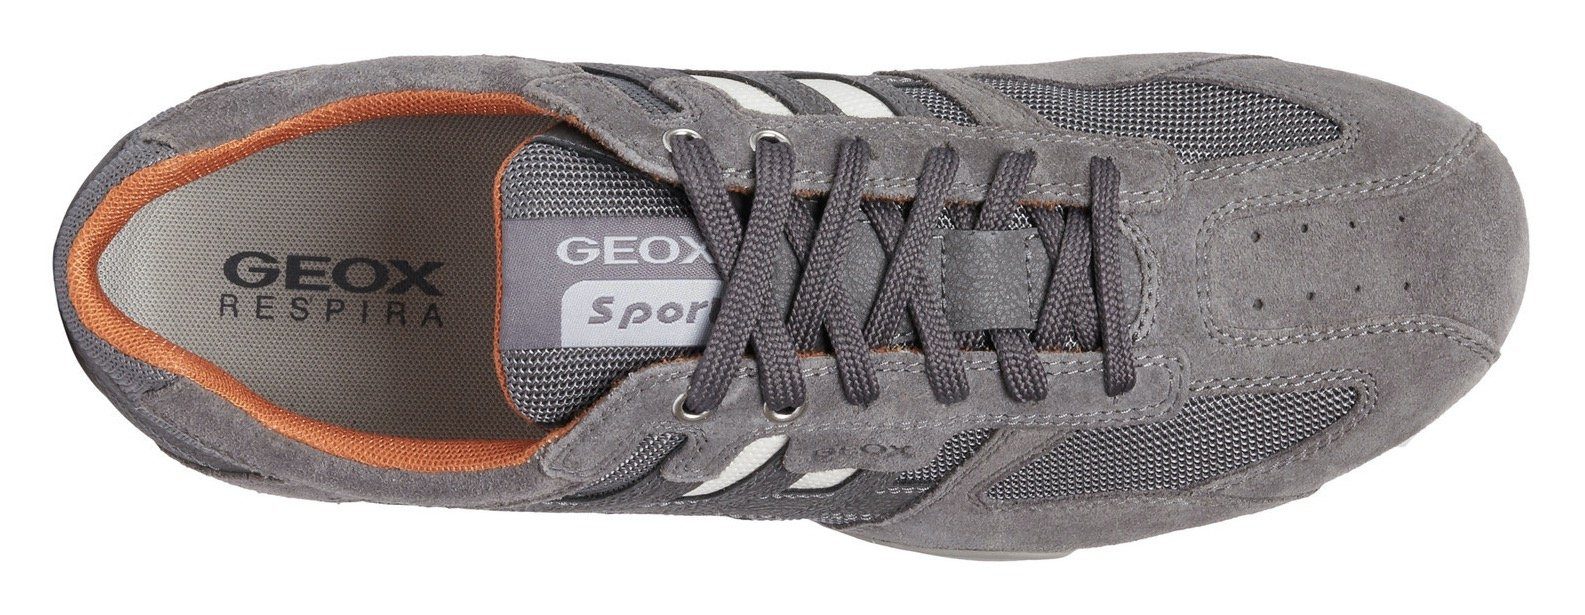 Materialmix orange Spezial hellgrau, Geox Geox mit Snake im Sneaker Membrane weiß,